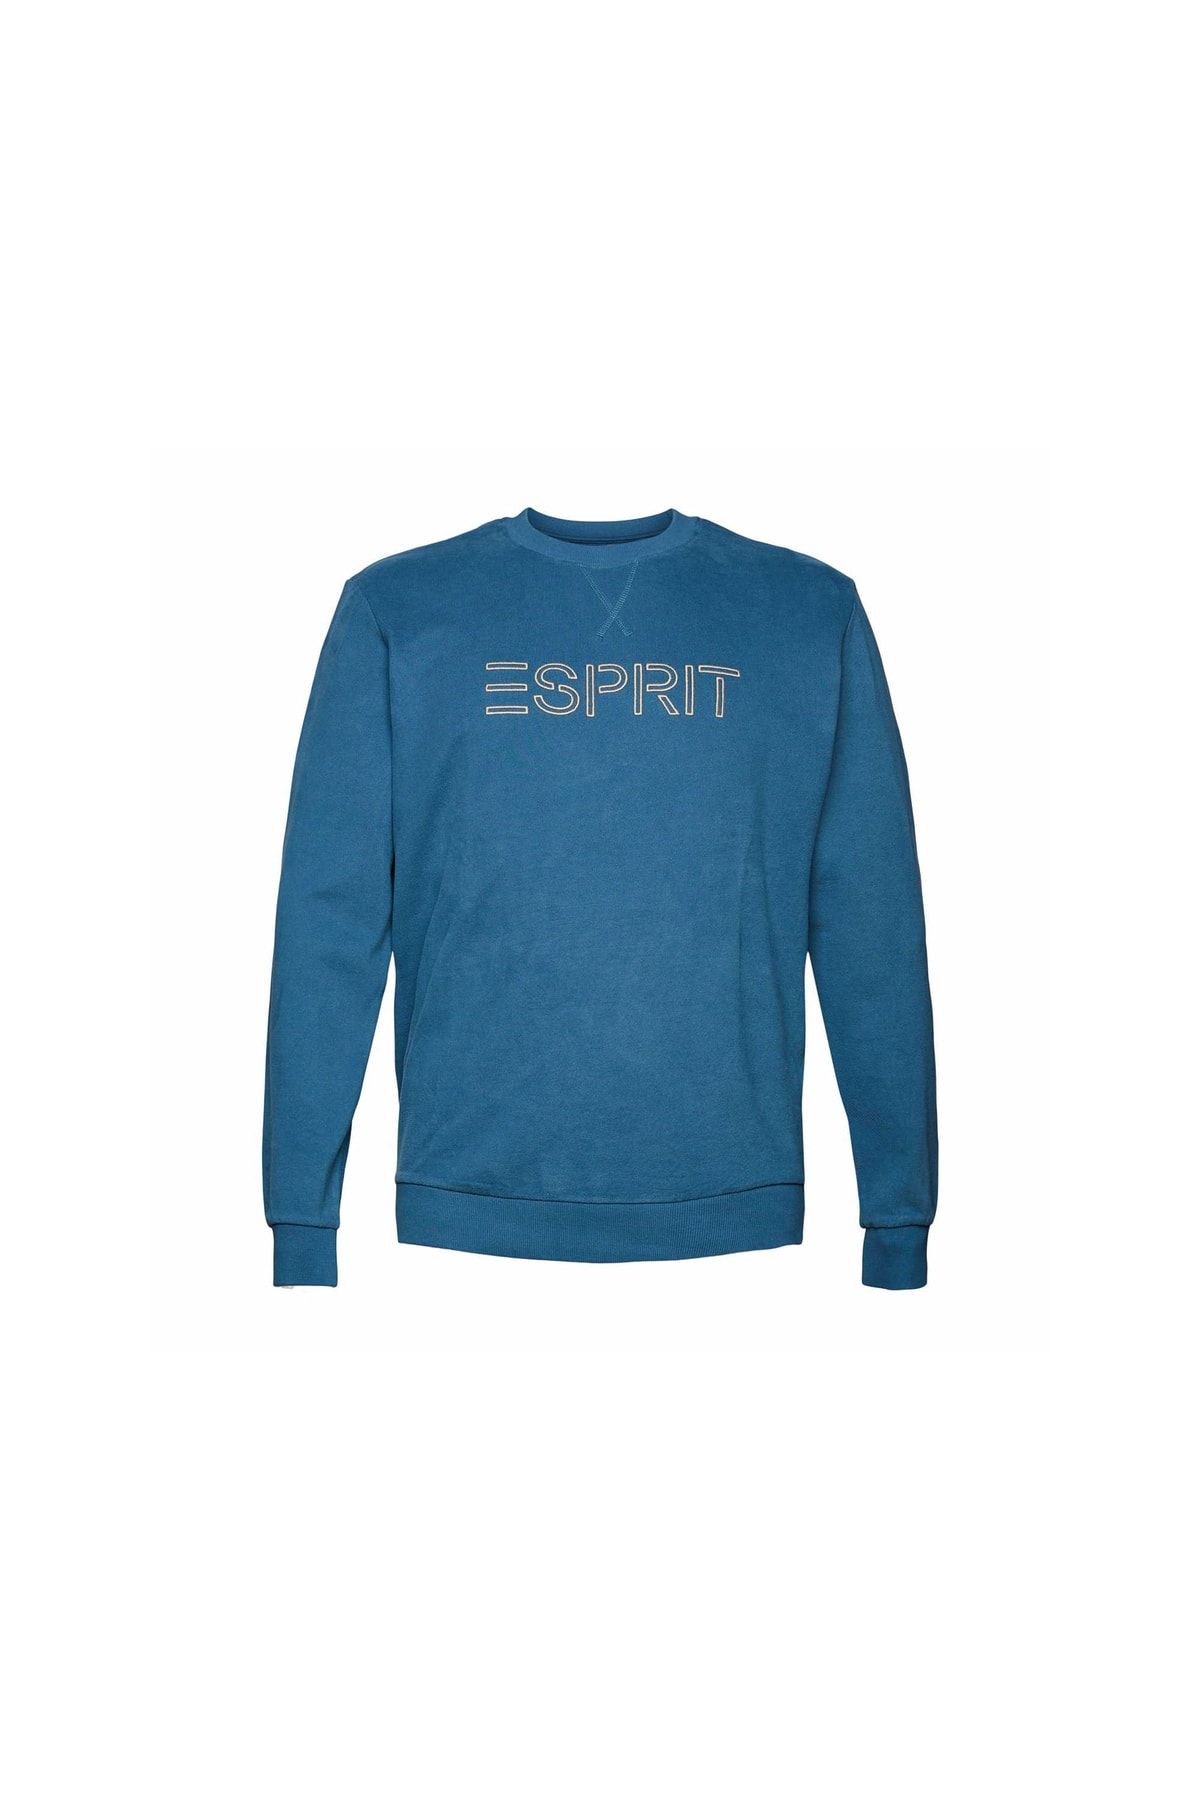 Esprit Pullover - Blau - Regular - Trendyol Fit